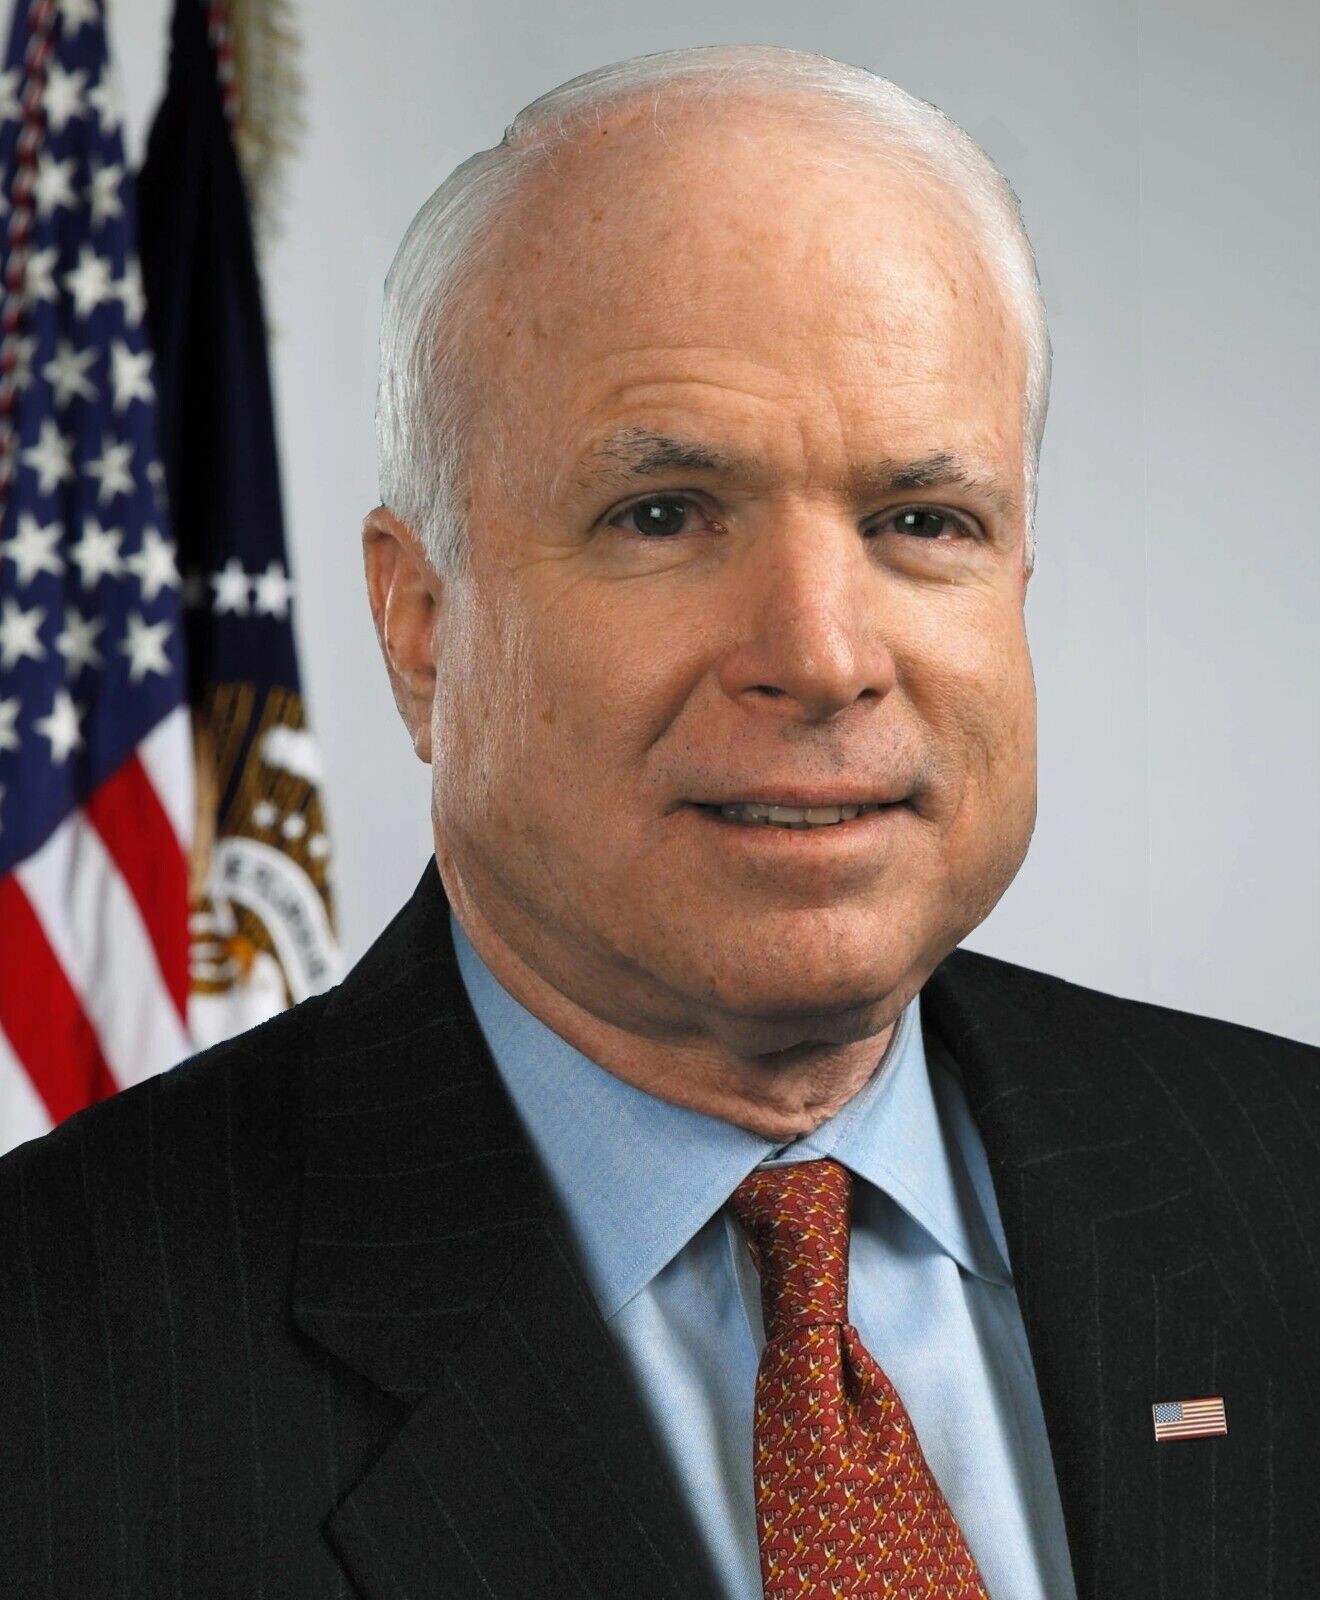 Arizona Senator John McCain Official Portrait Poster Picture Photo Print 11x17